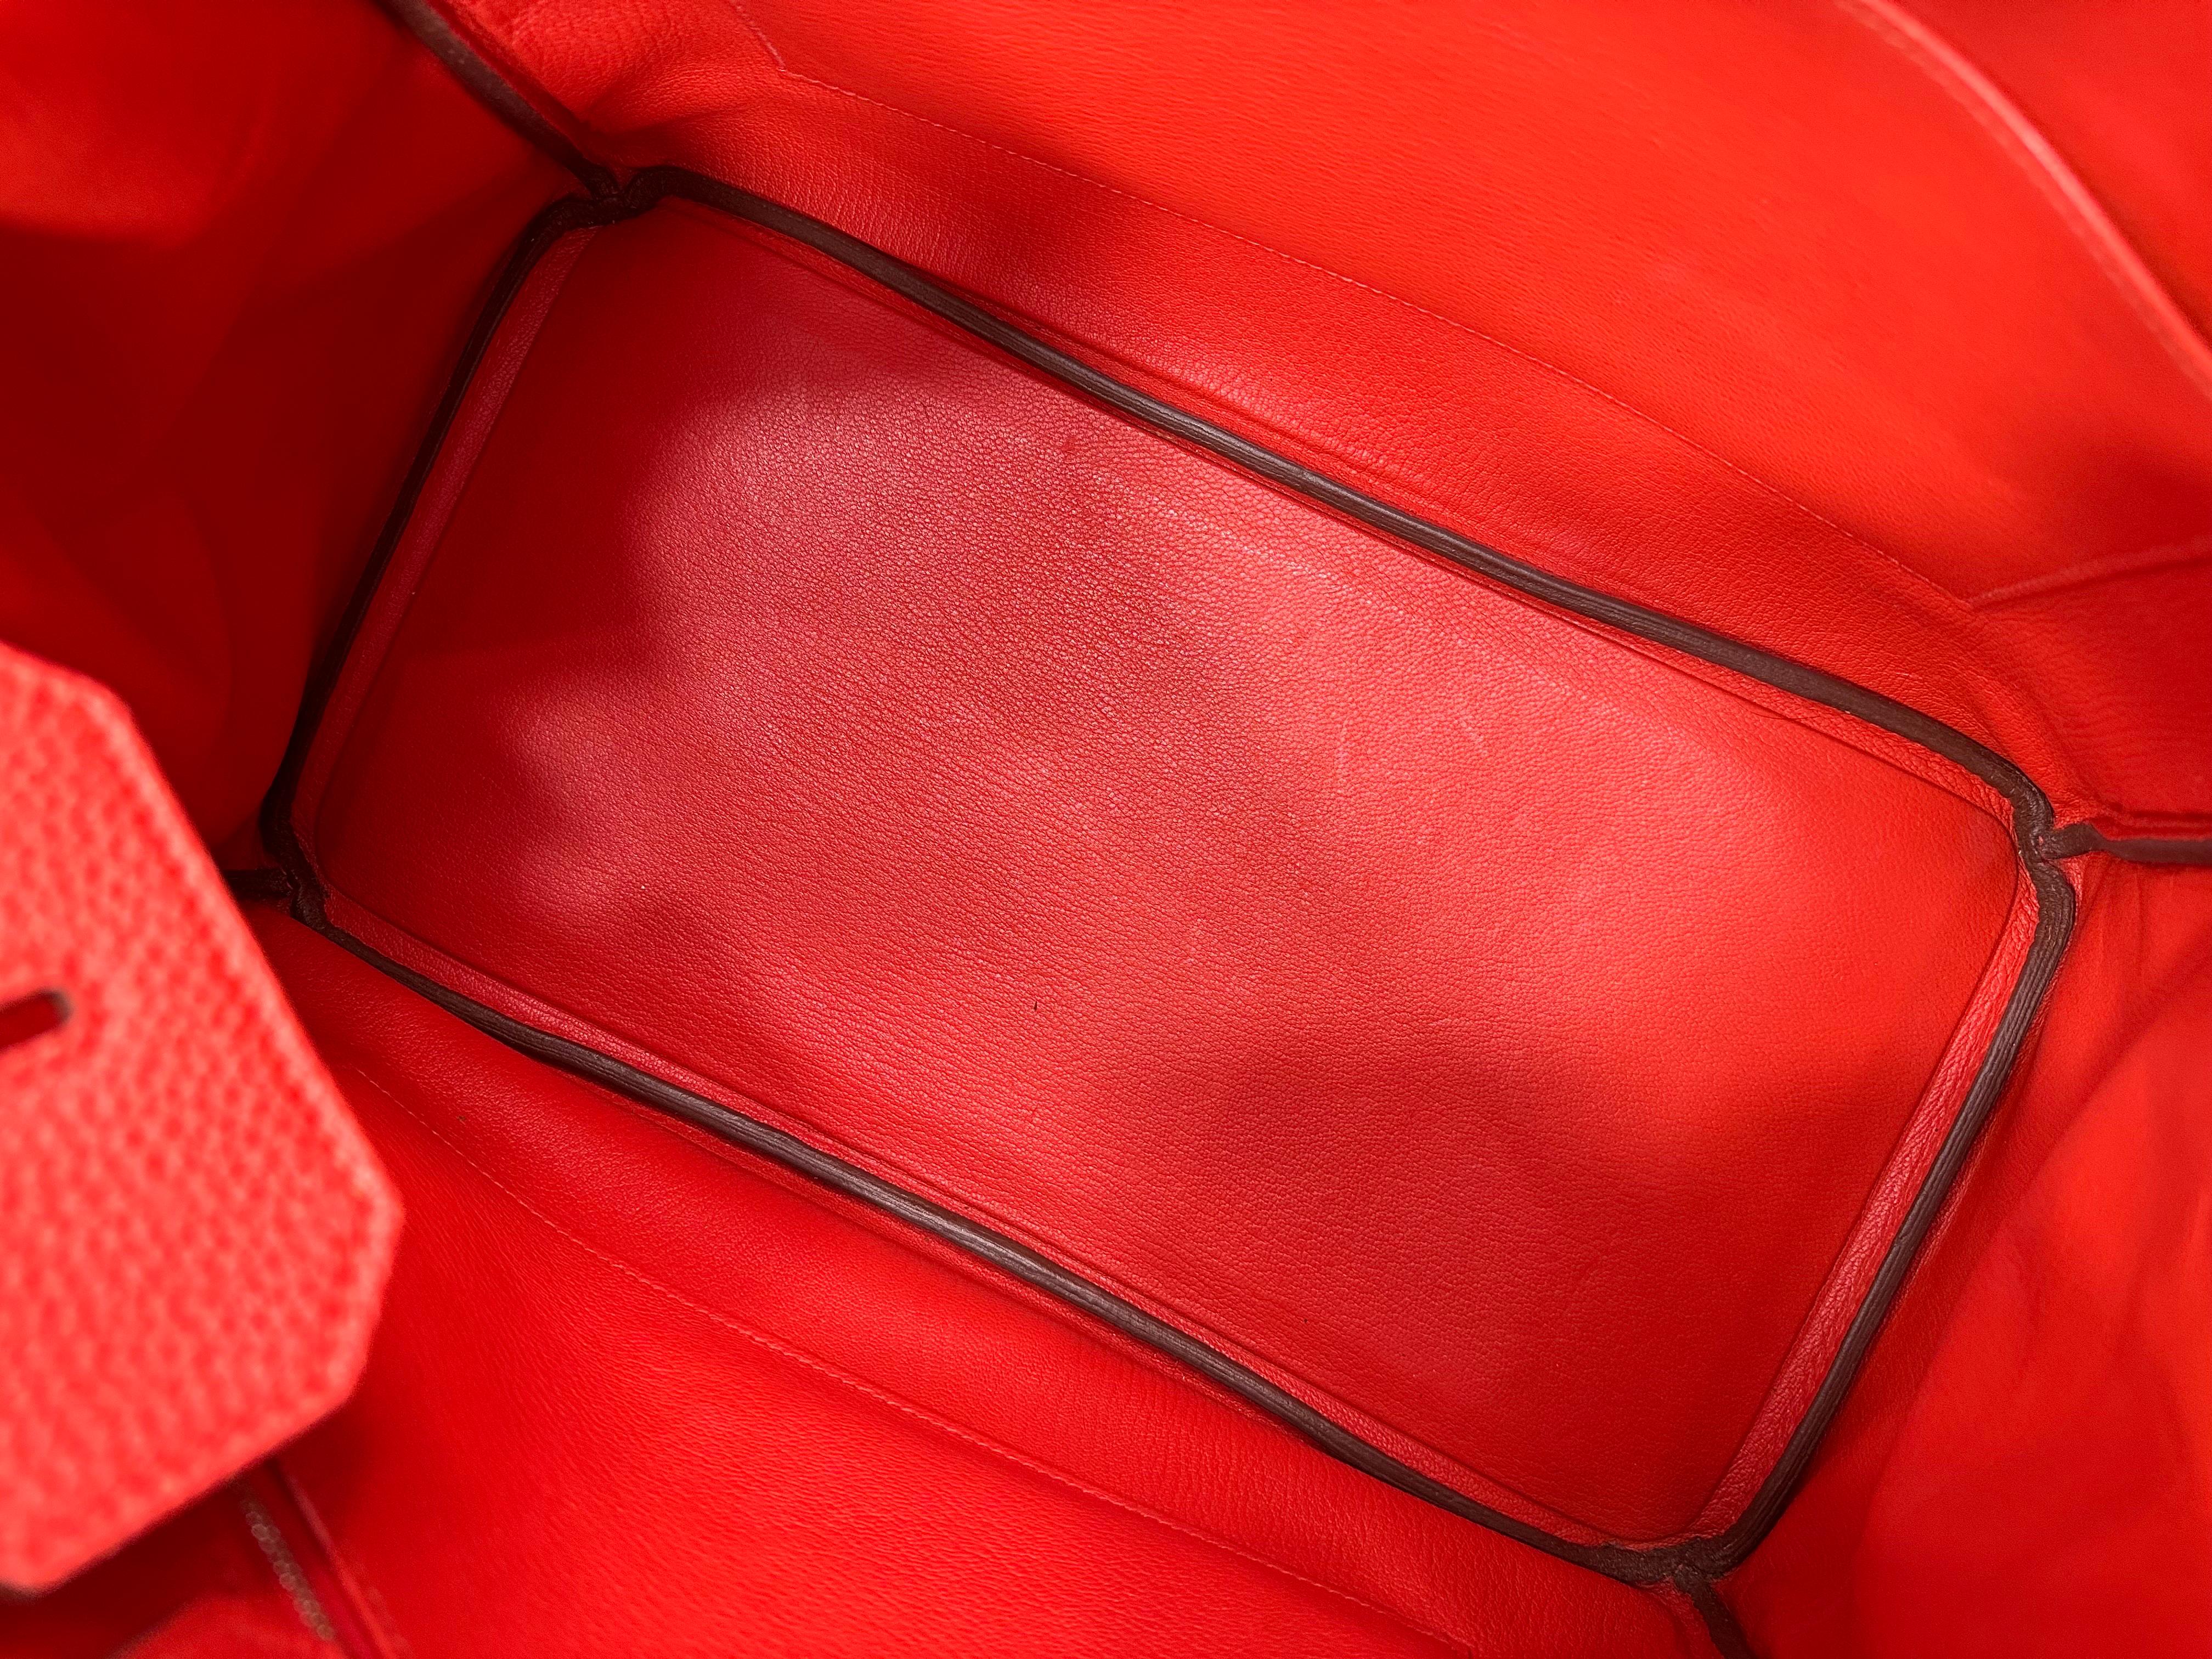 2011 Hermès Birkin 35 Togo Leather Rouge Capucine Top Handle Bag For Sale 12